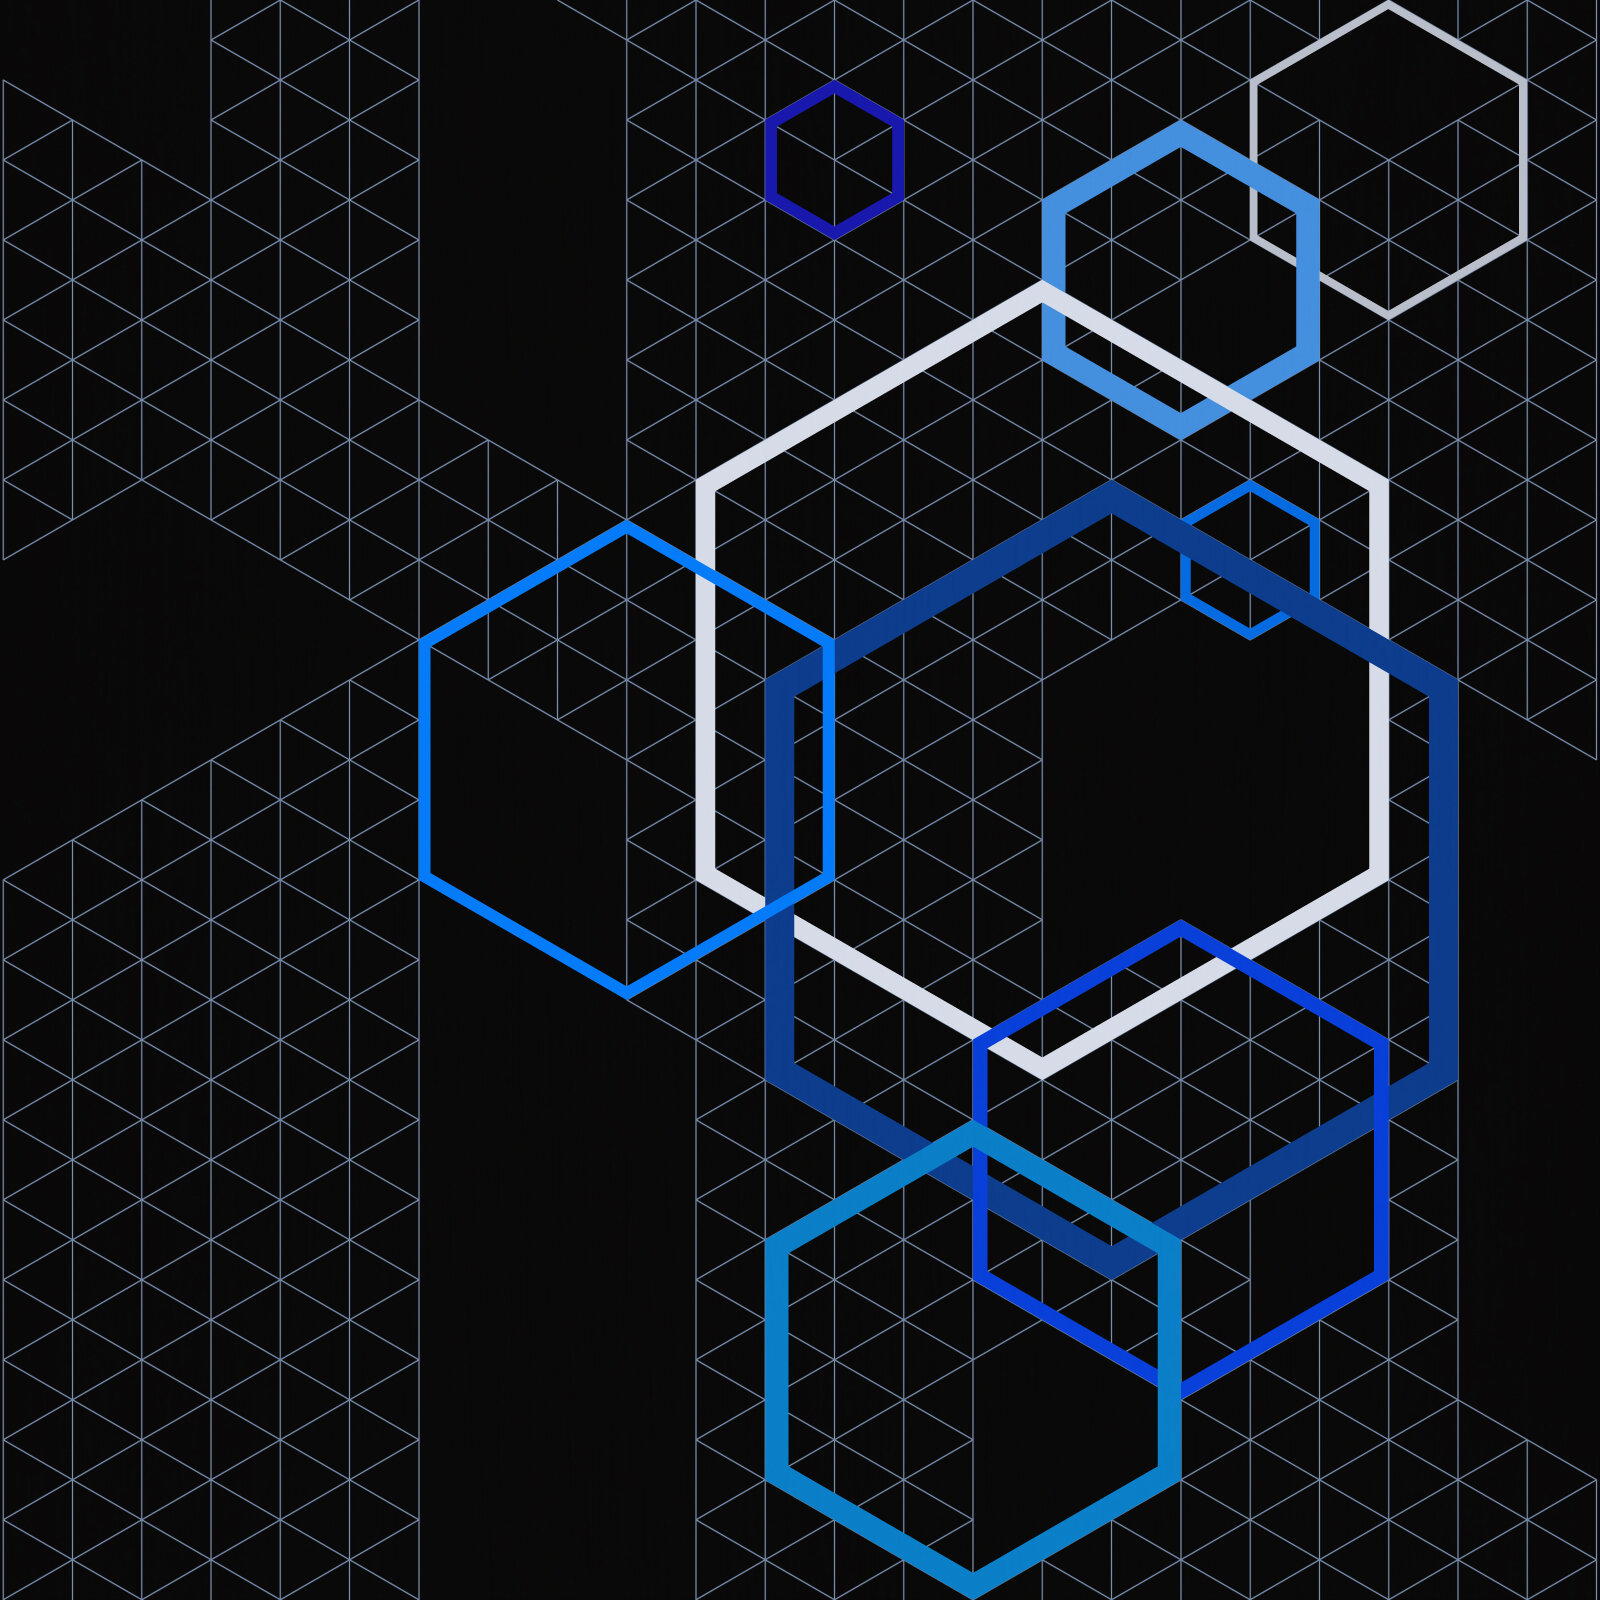 Conceptual-geometry [20200506] [Hexagons] [Blue], acrylic on canvas 